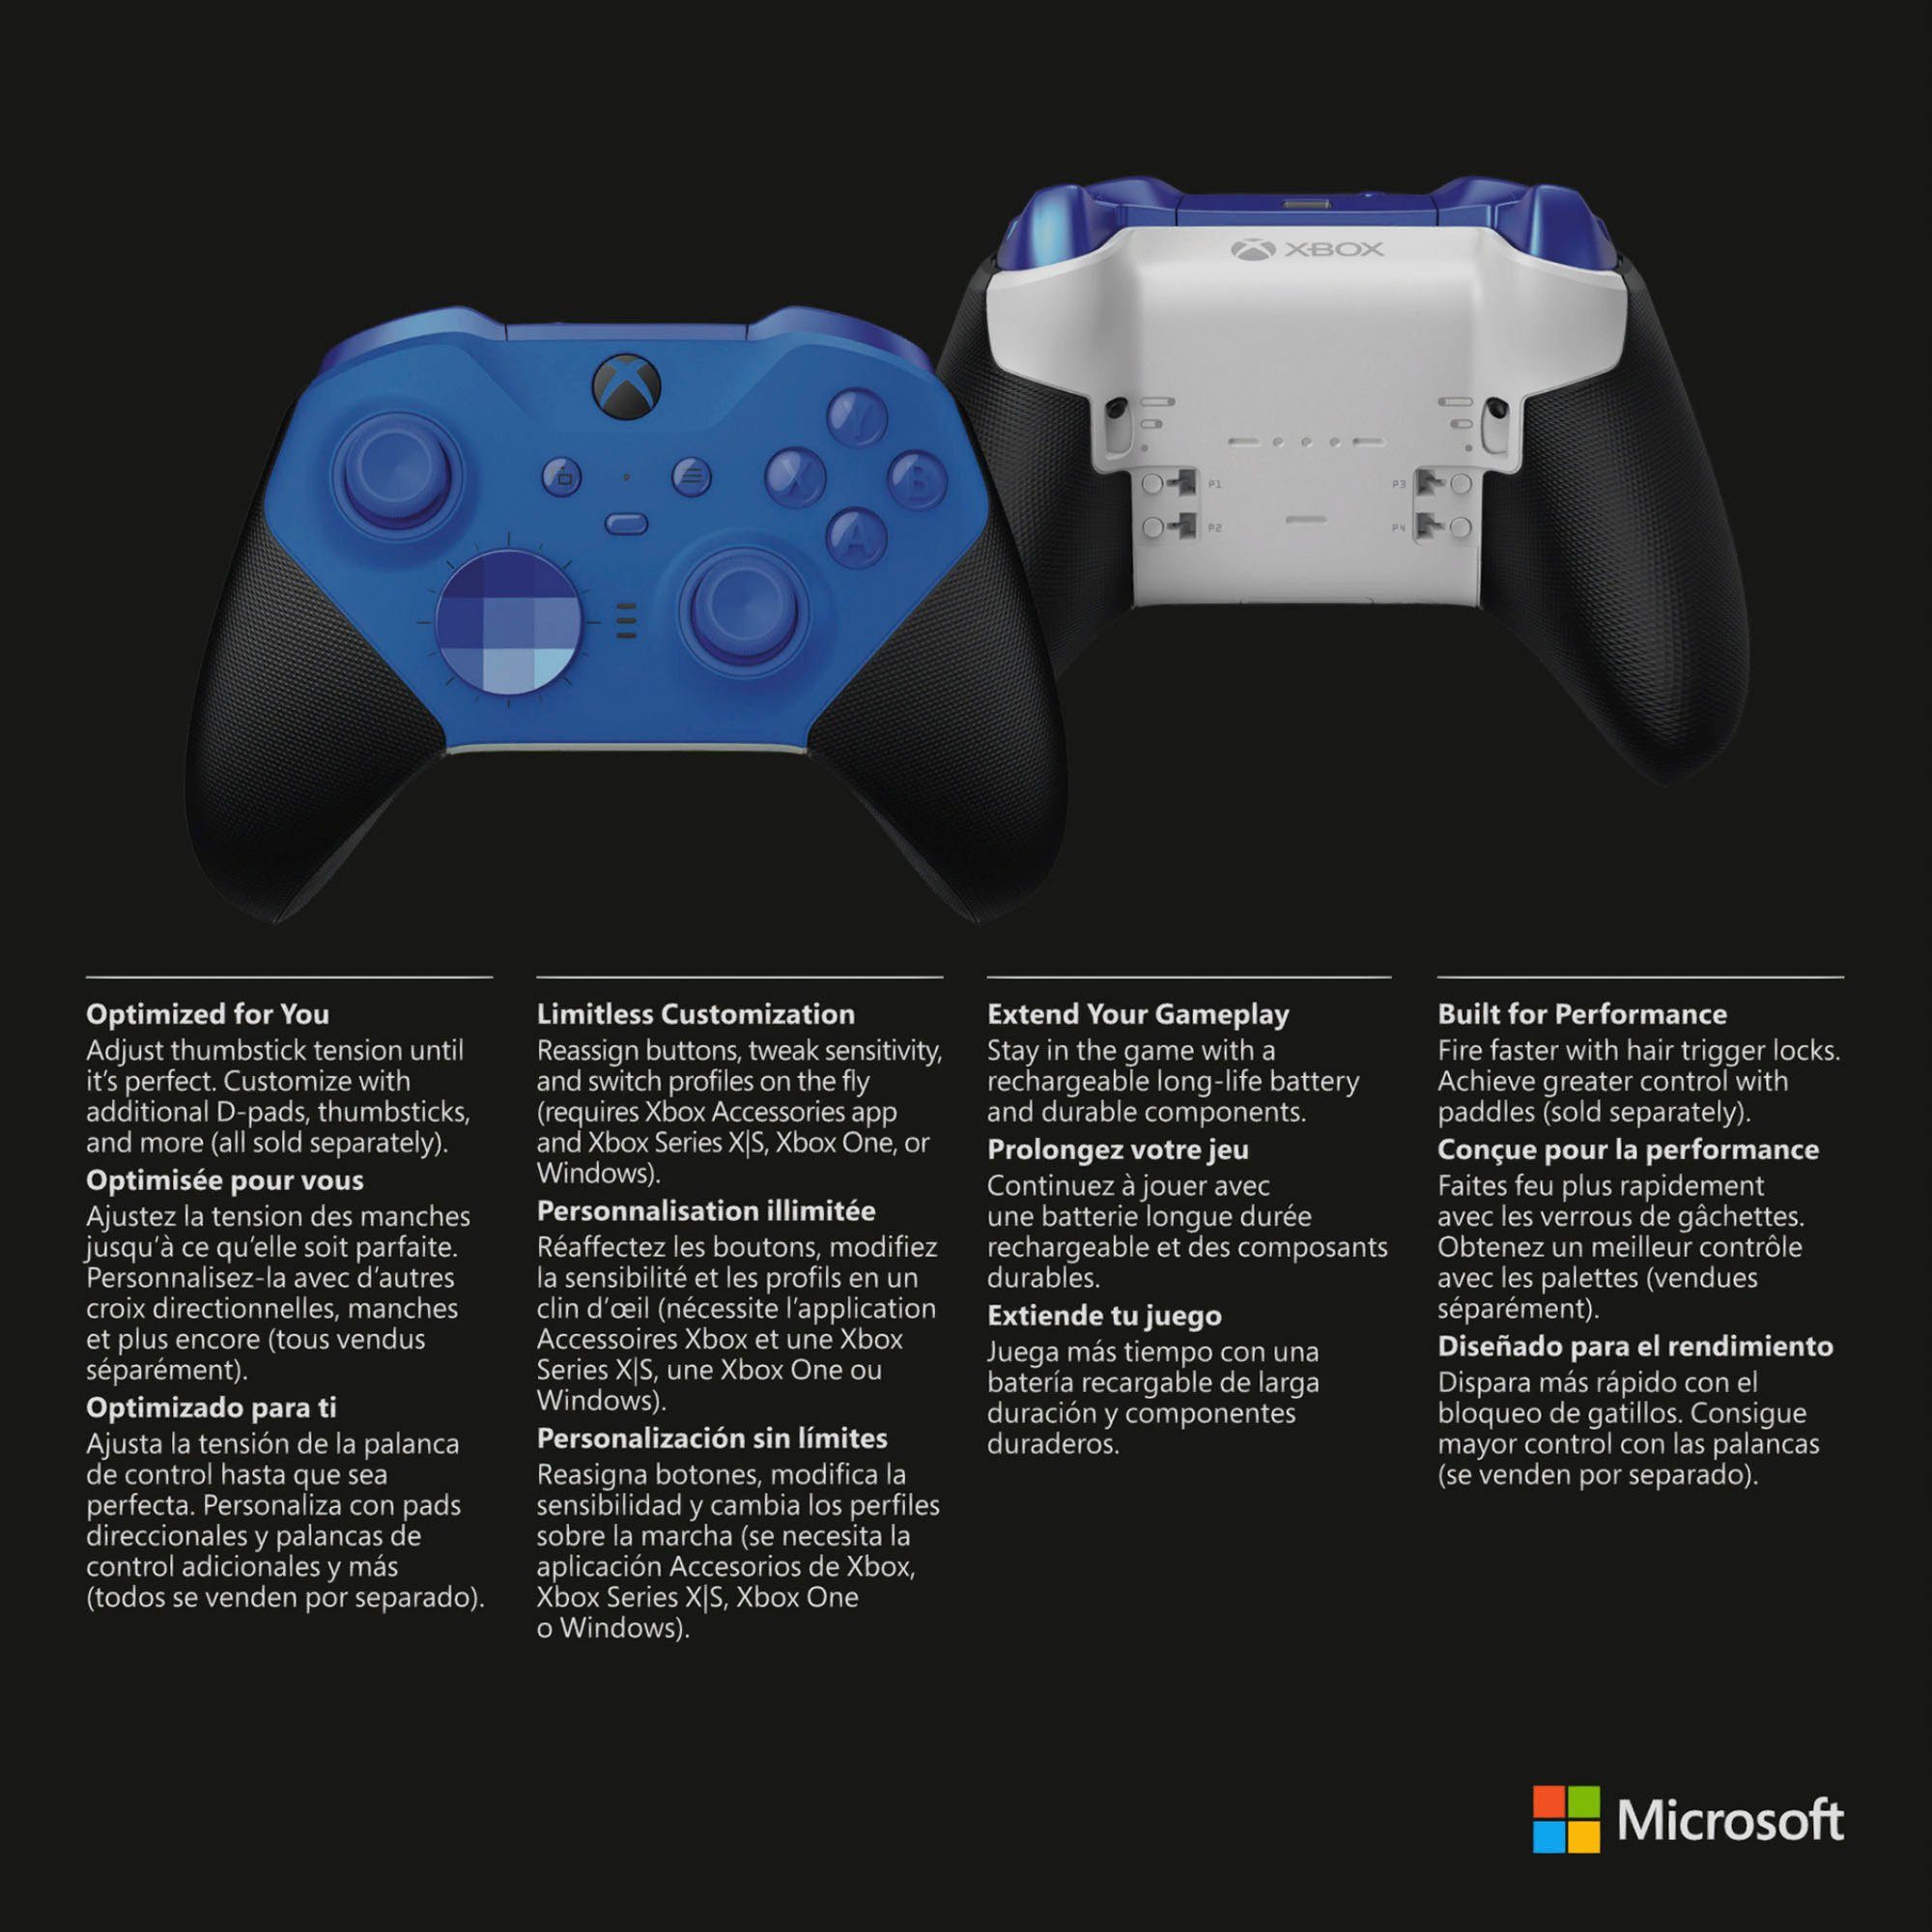 Edition Series – Core 2 Wireless-Controller Elite Xbox